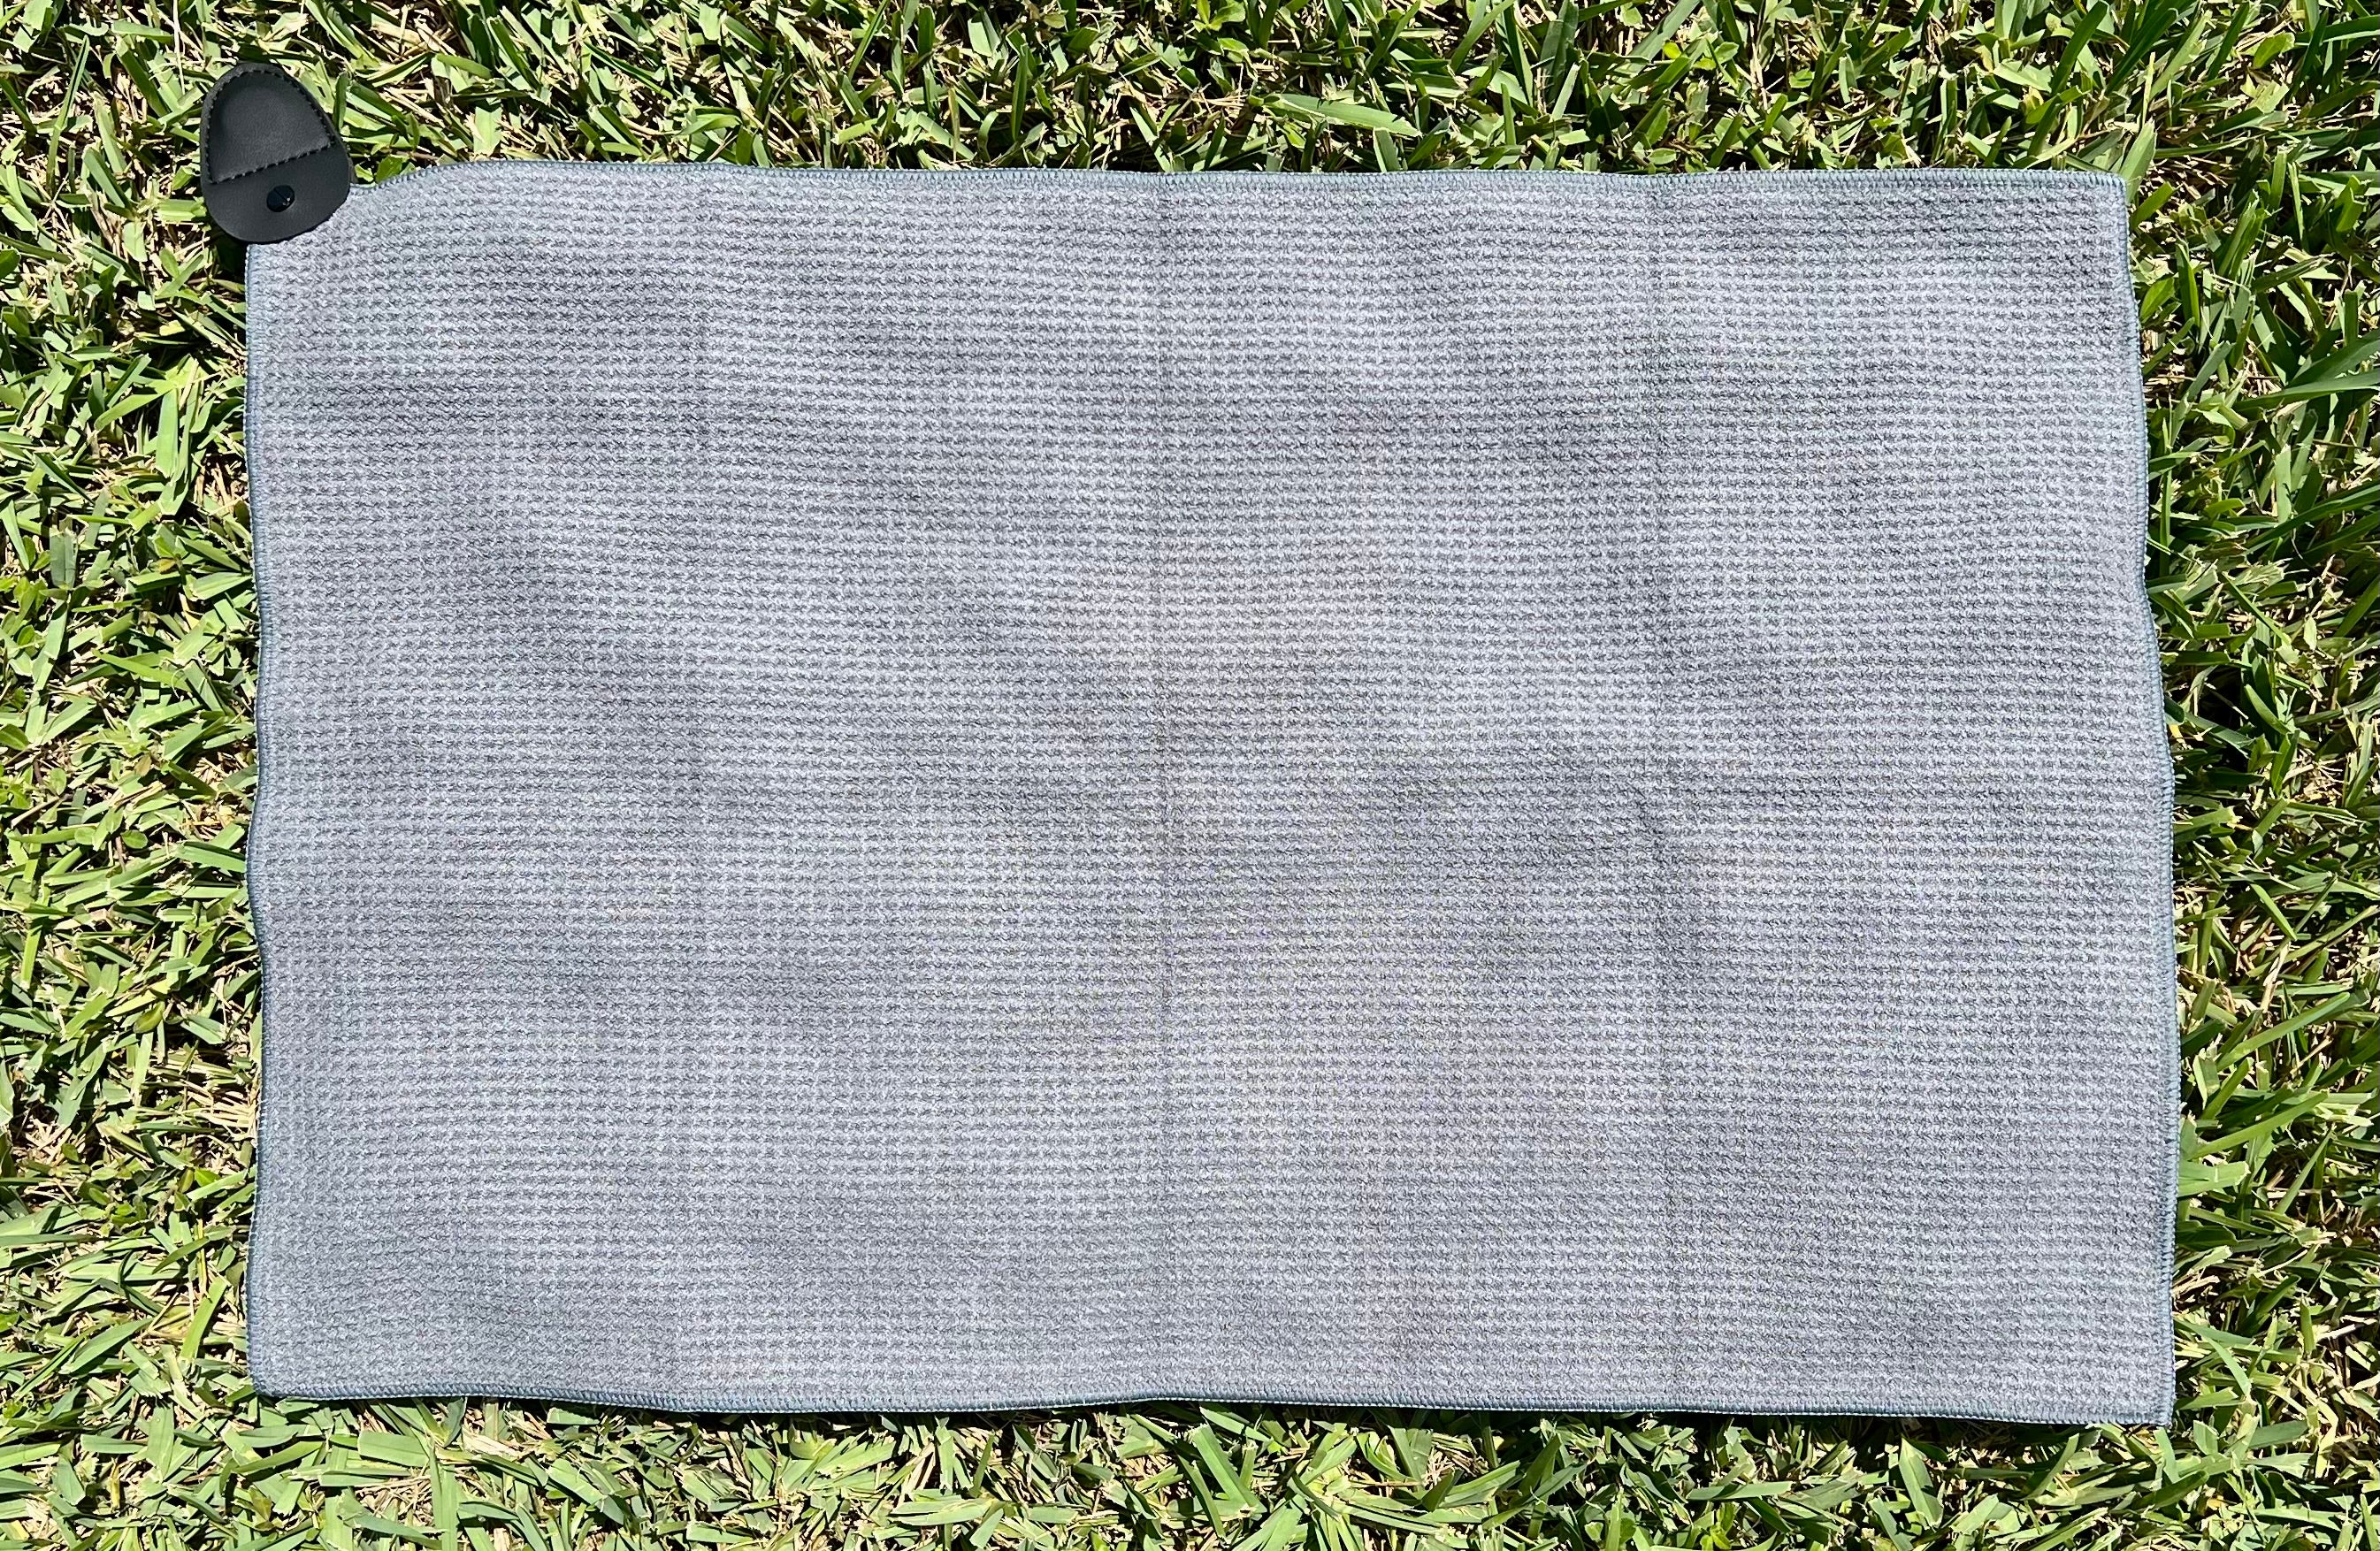 Premium 16" x 24" Microfiber Magnetic Golf Towel